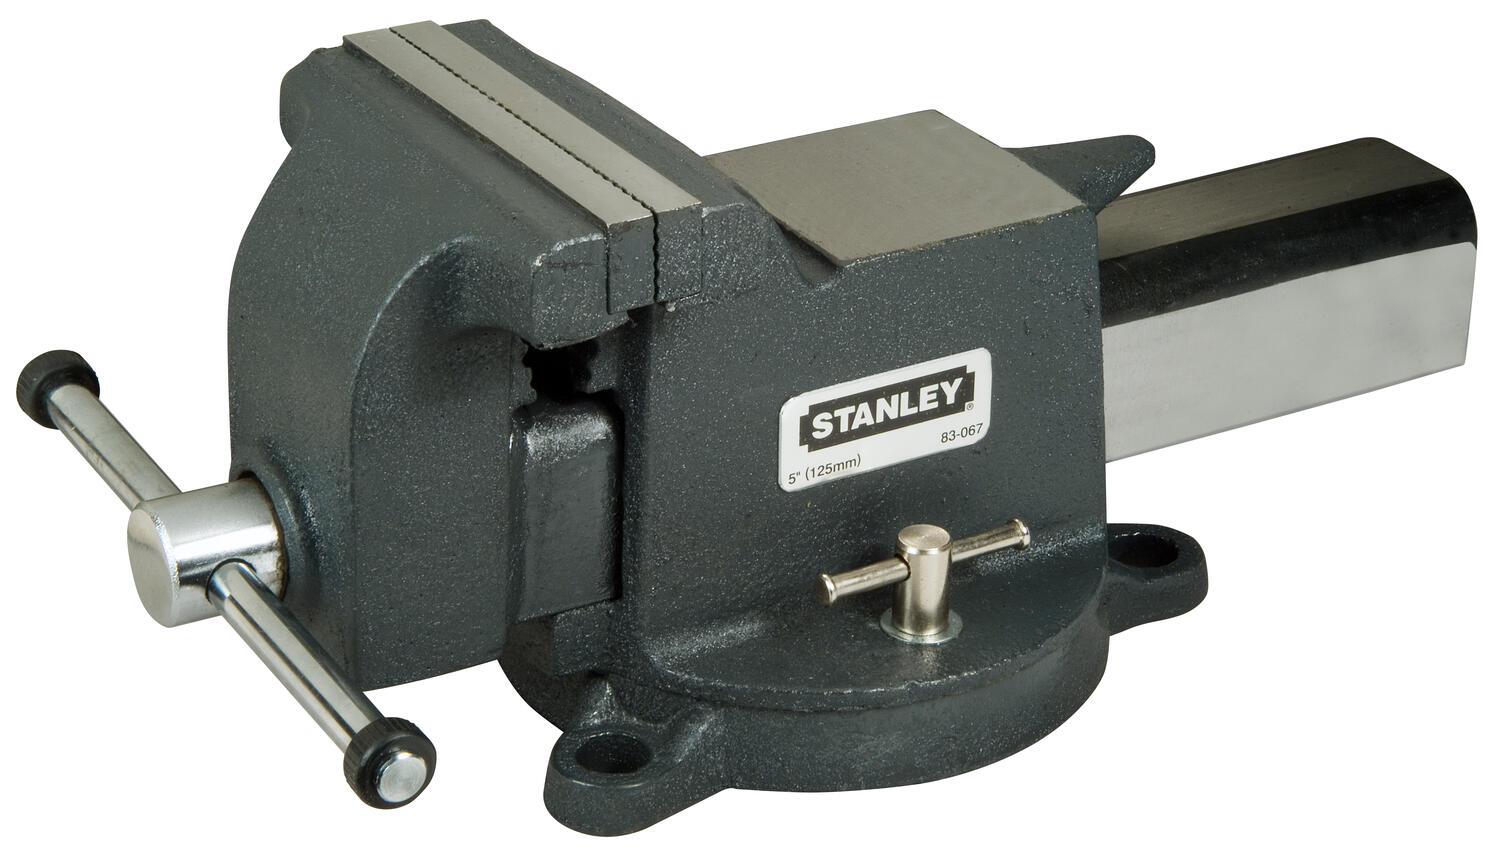 Stanley Heavy Duty bankschroef 125mm / 5